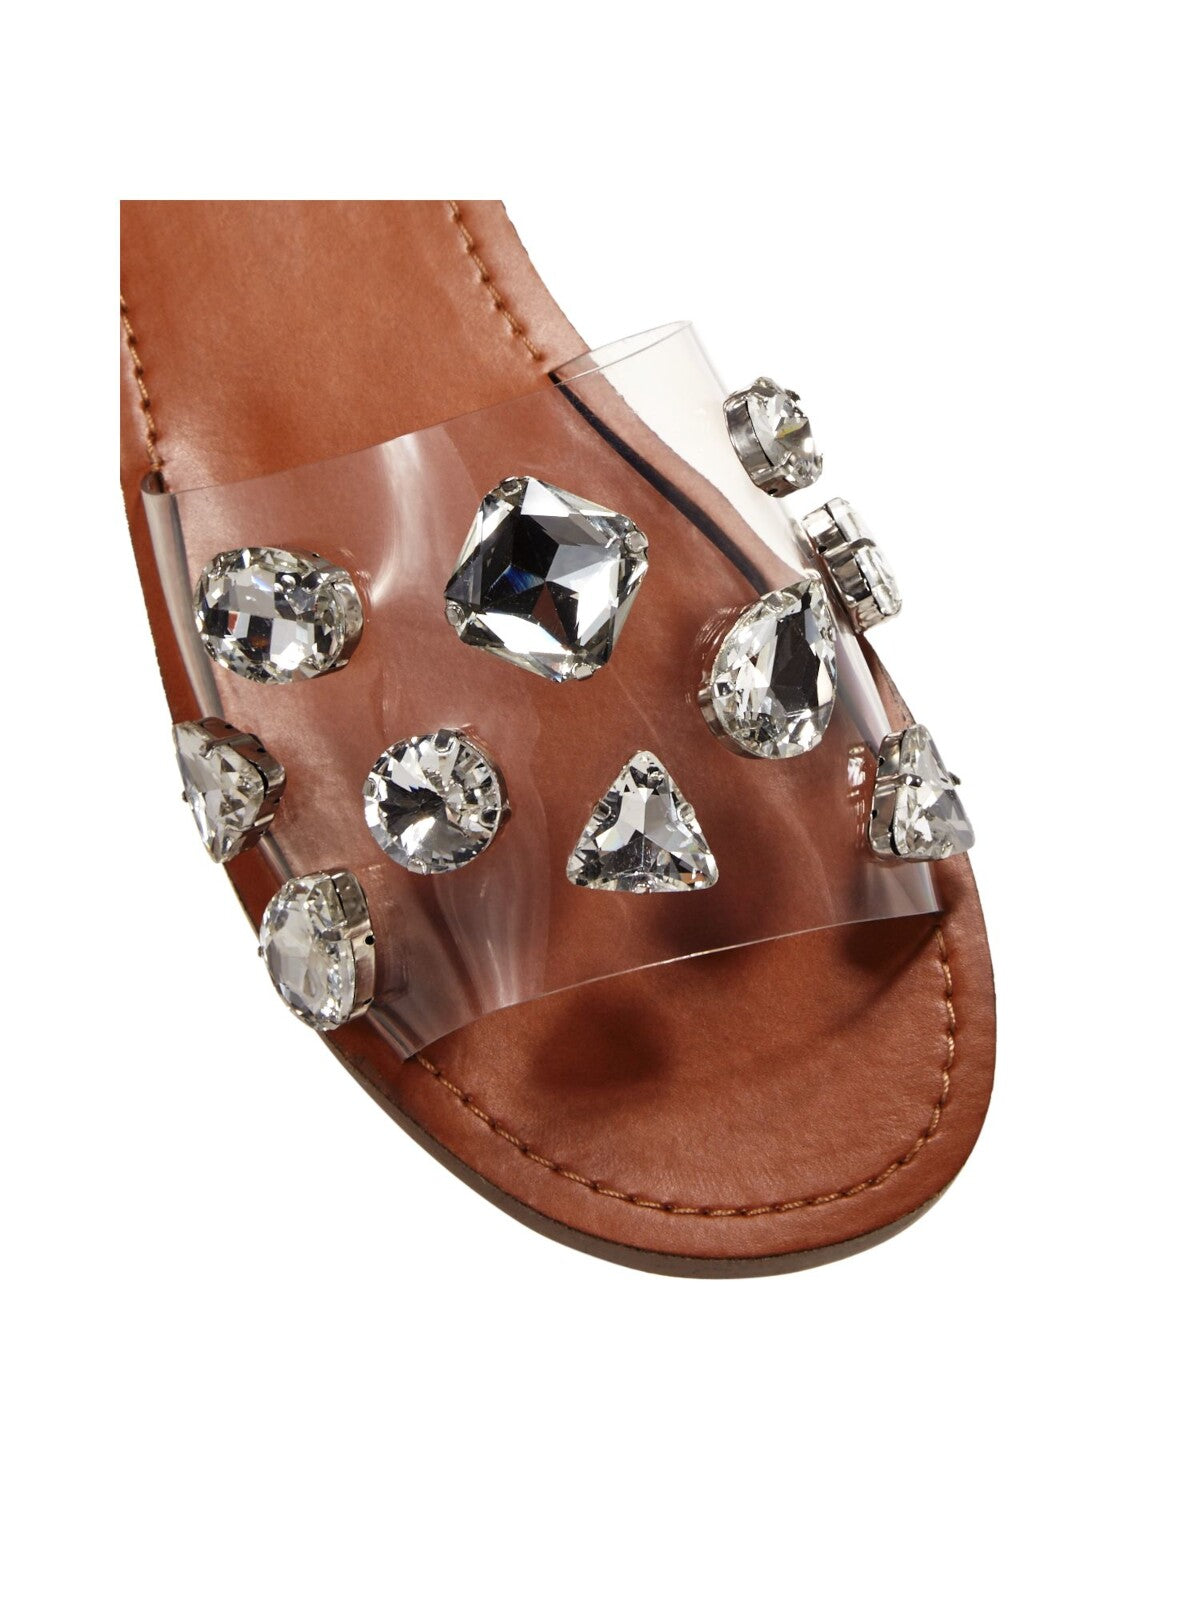 AQUA Womens Clear Translucent Strap Twink Round Toe Slip On Slide Sandals Shoes 7.5 M